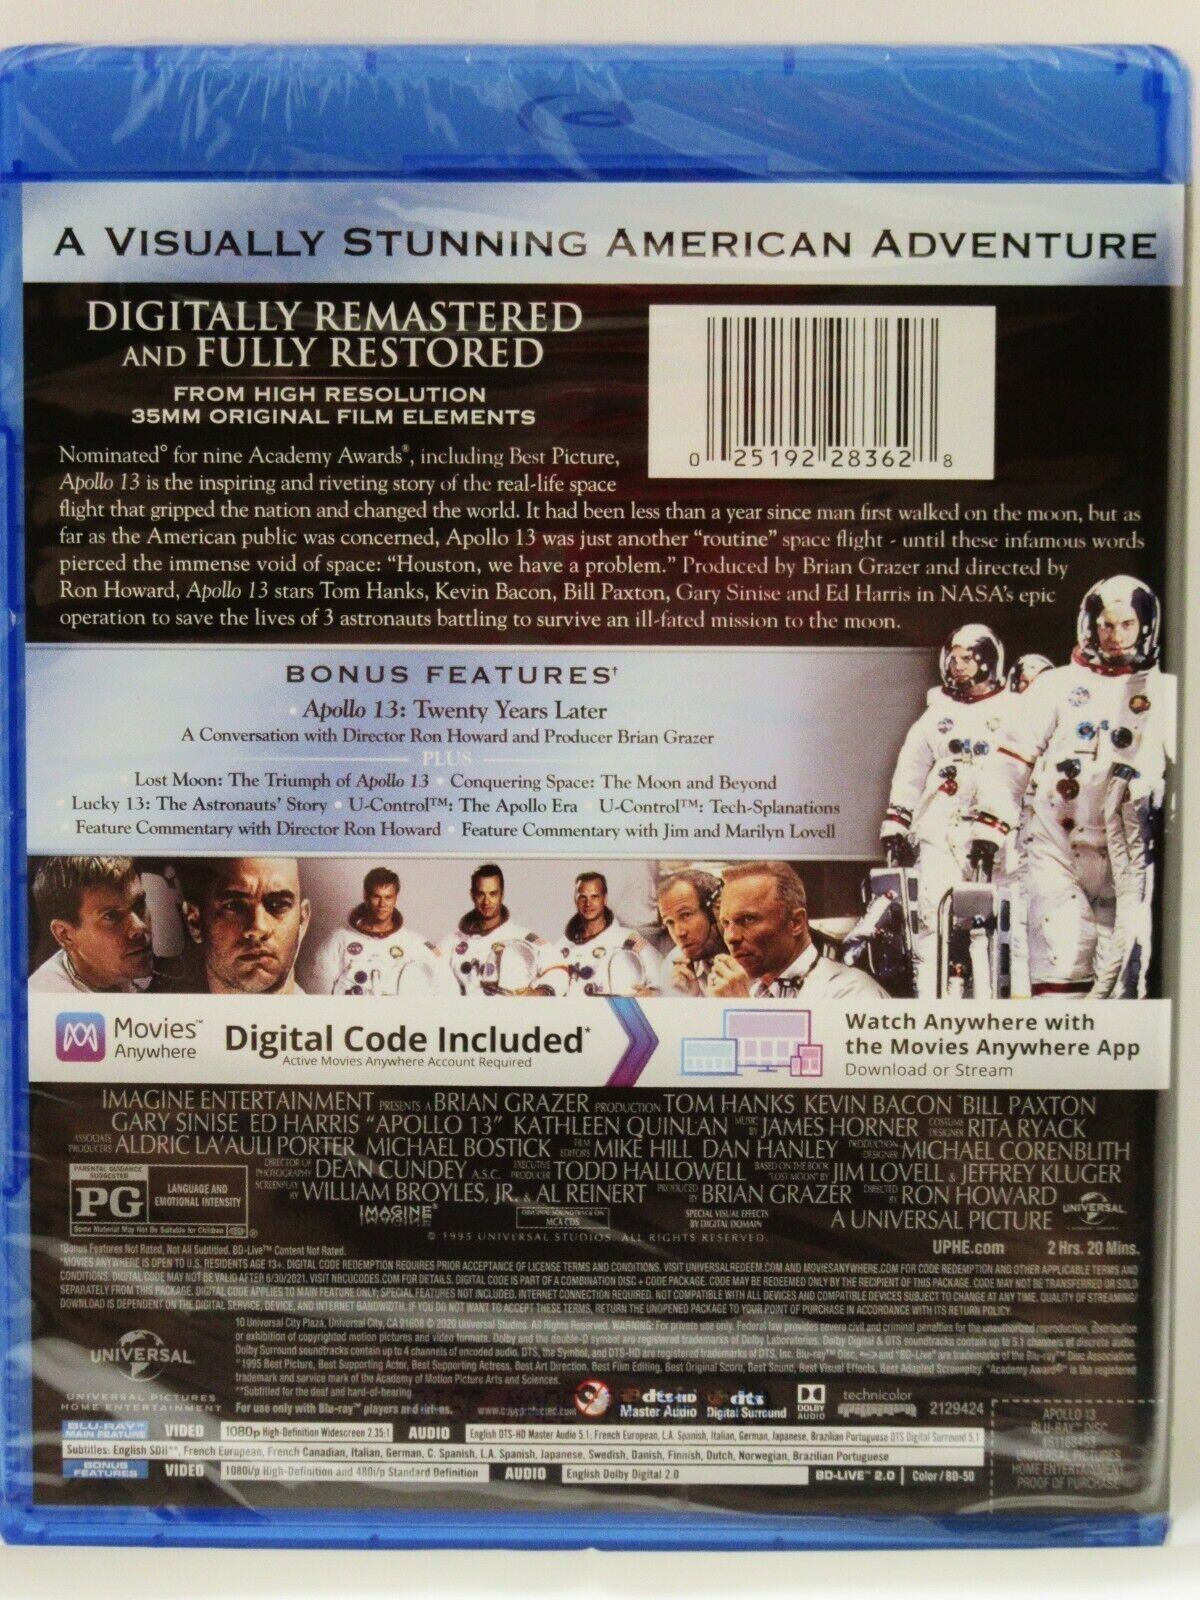 Apollo 13 ~ Tom Hanks Bacon Paxton Sinise Harris - Movie ~ New Blu-ray Disc